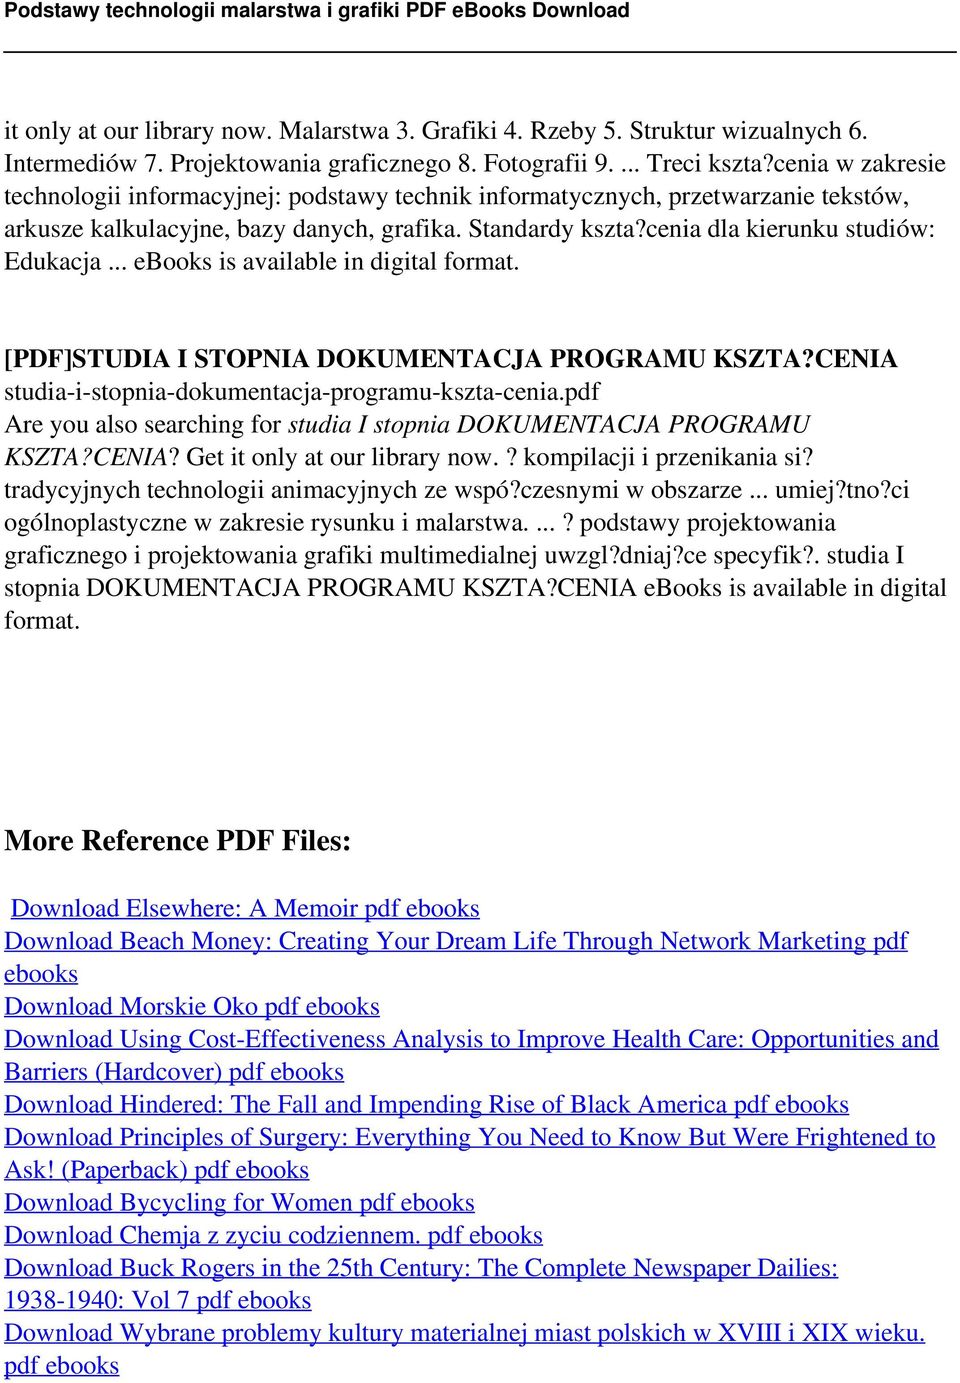 .. ebooks is available in digital format. [PDF]STUDIA I STOPNIA DOKUMENTACJA PROGRAMU KSZTA?CENIA studia-i-stopnia-dokumentacja-programu-kszta-cenia.